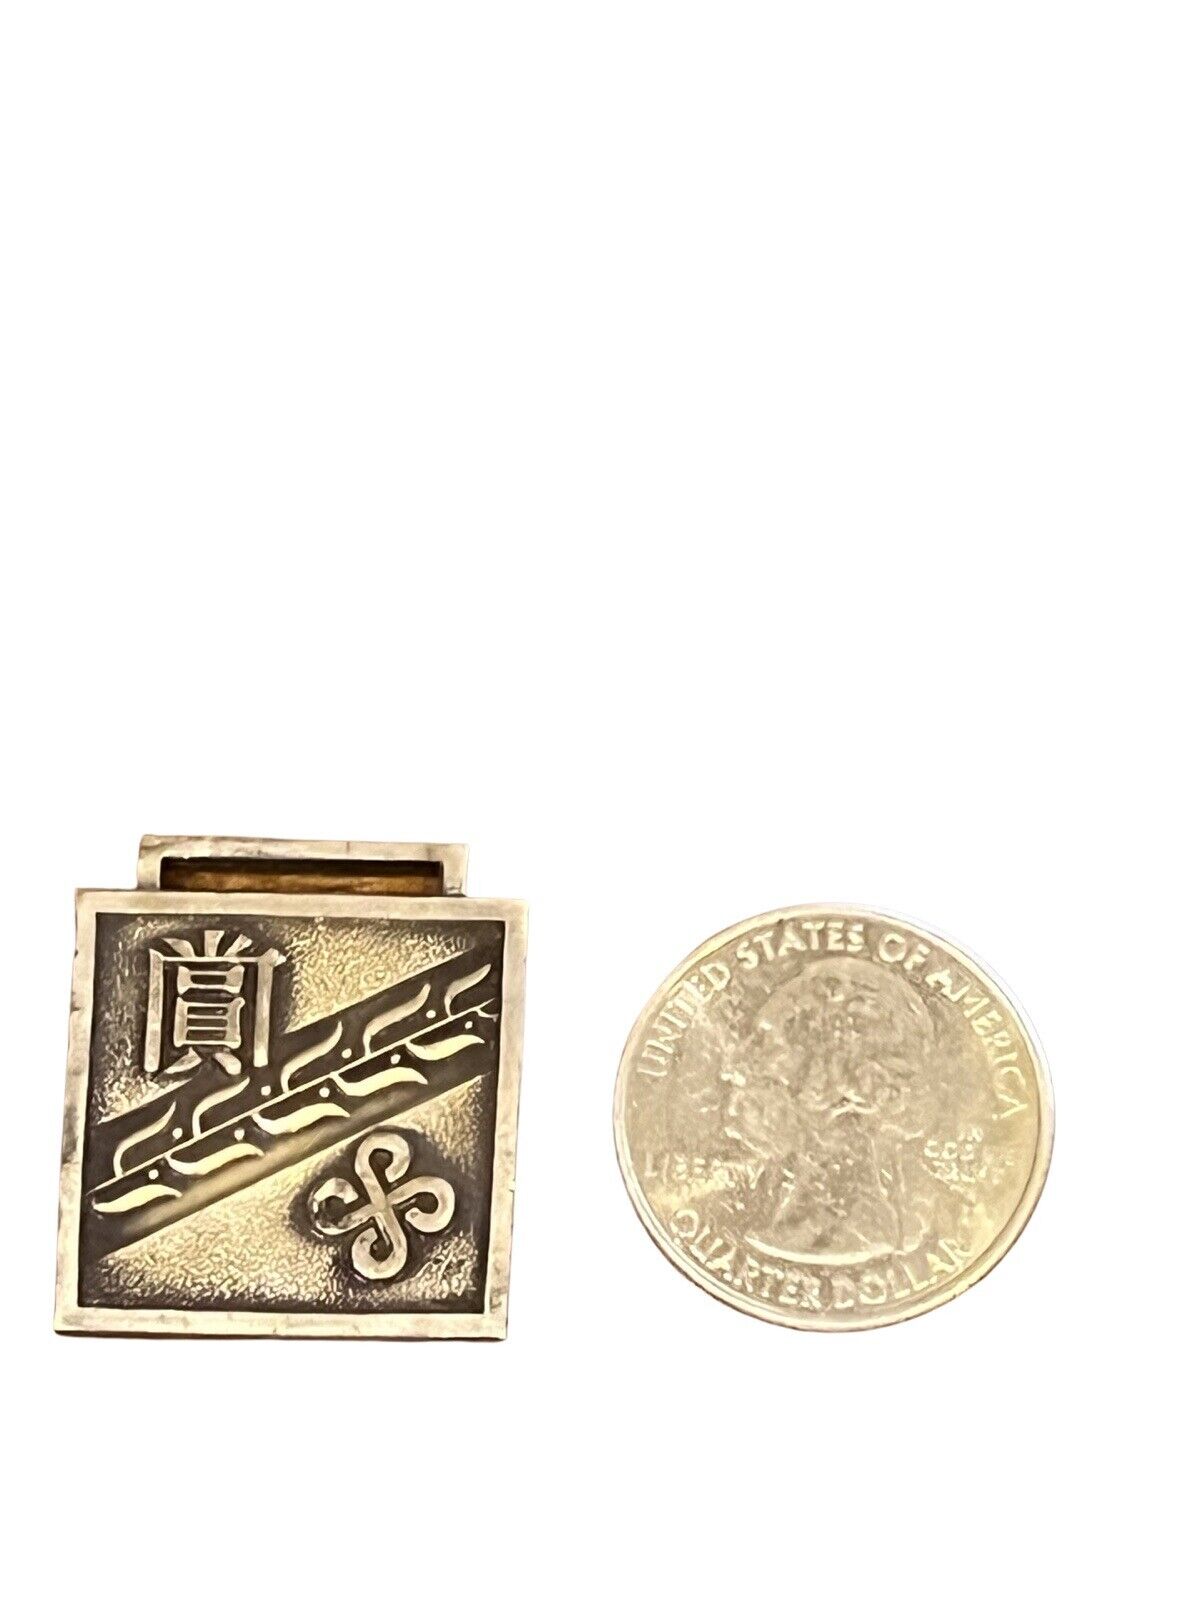 Vintage Japanese Unknown Award Medal Pin Badge Pendant Japan Square